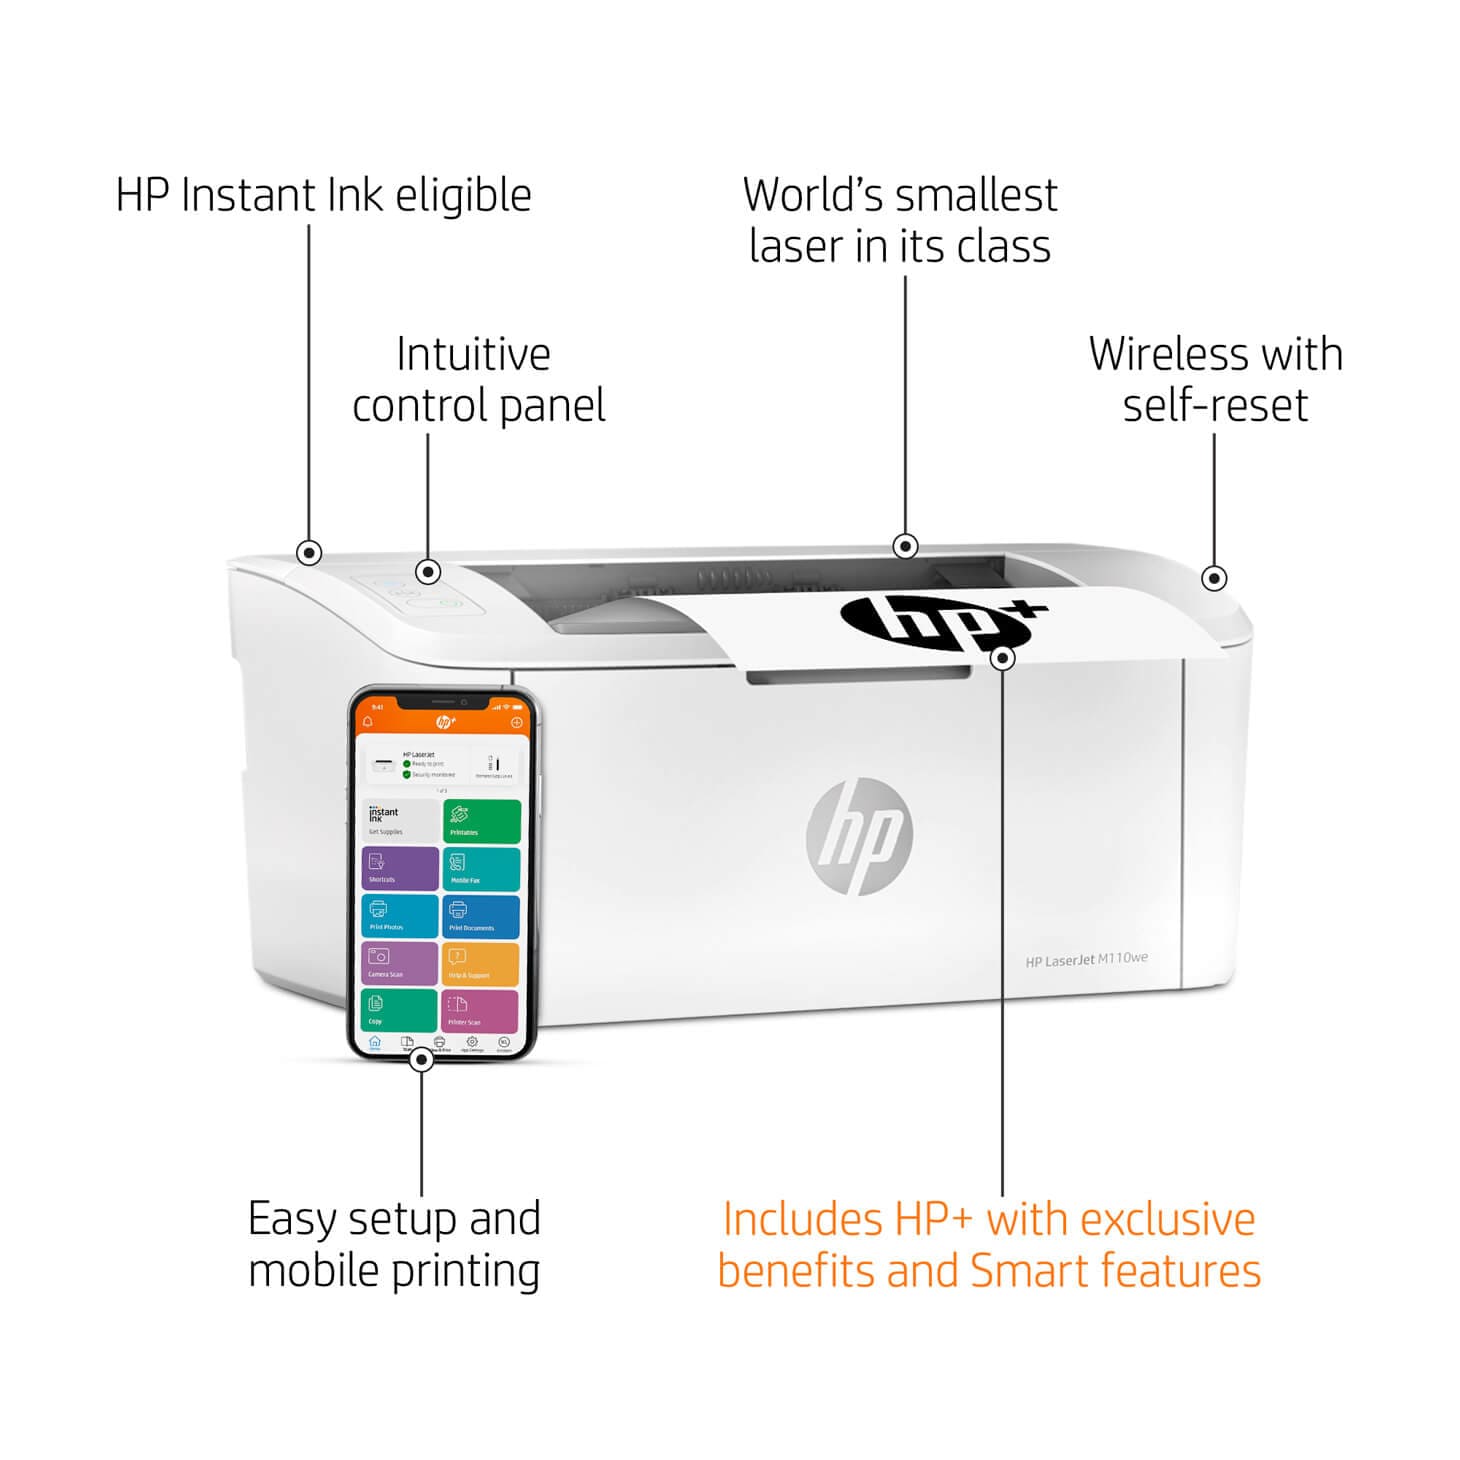 Draaien liefde maïs HP LaserJet M110we Printer with HP+ and 6 Months Instant Ink - $99.00